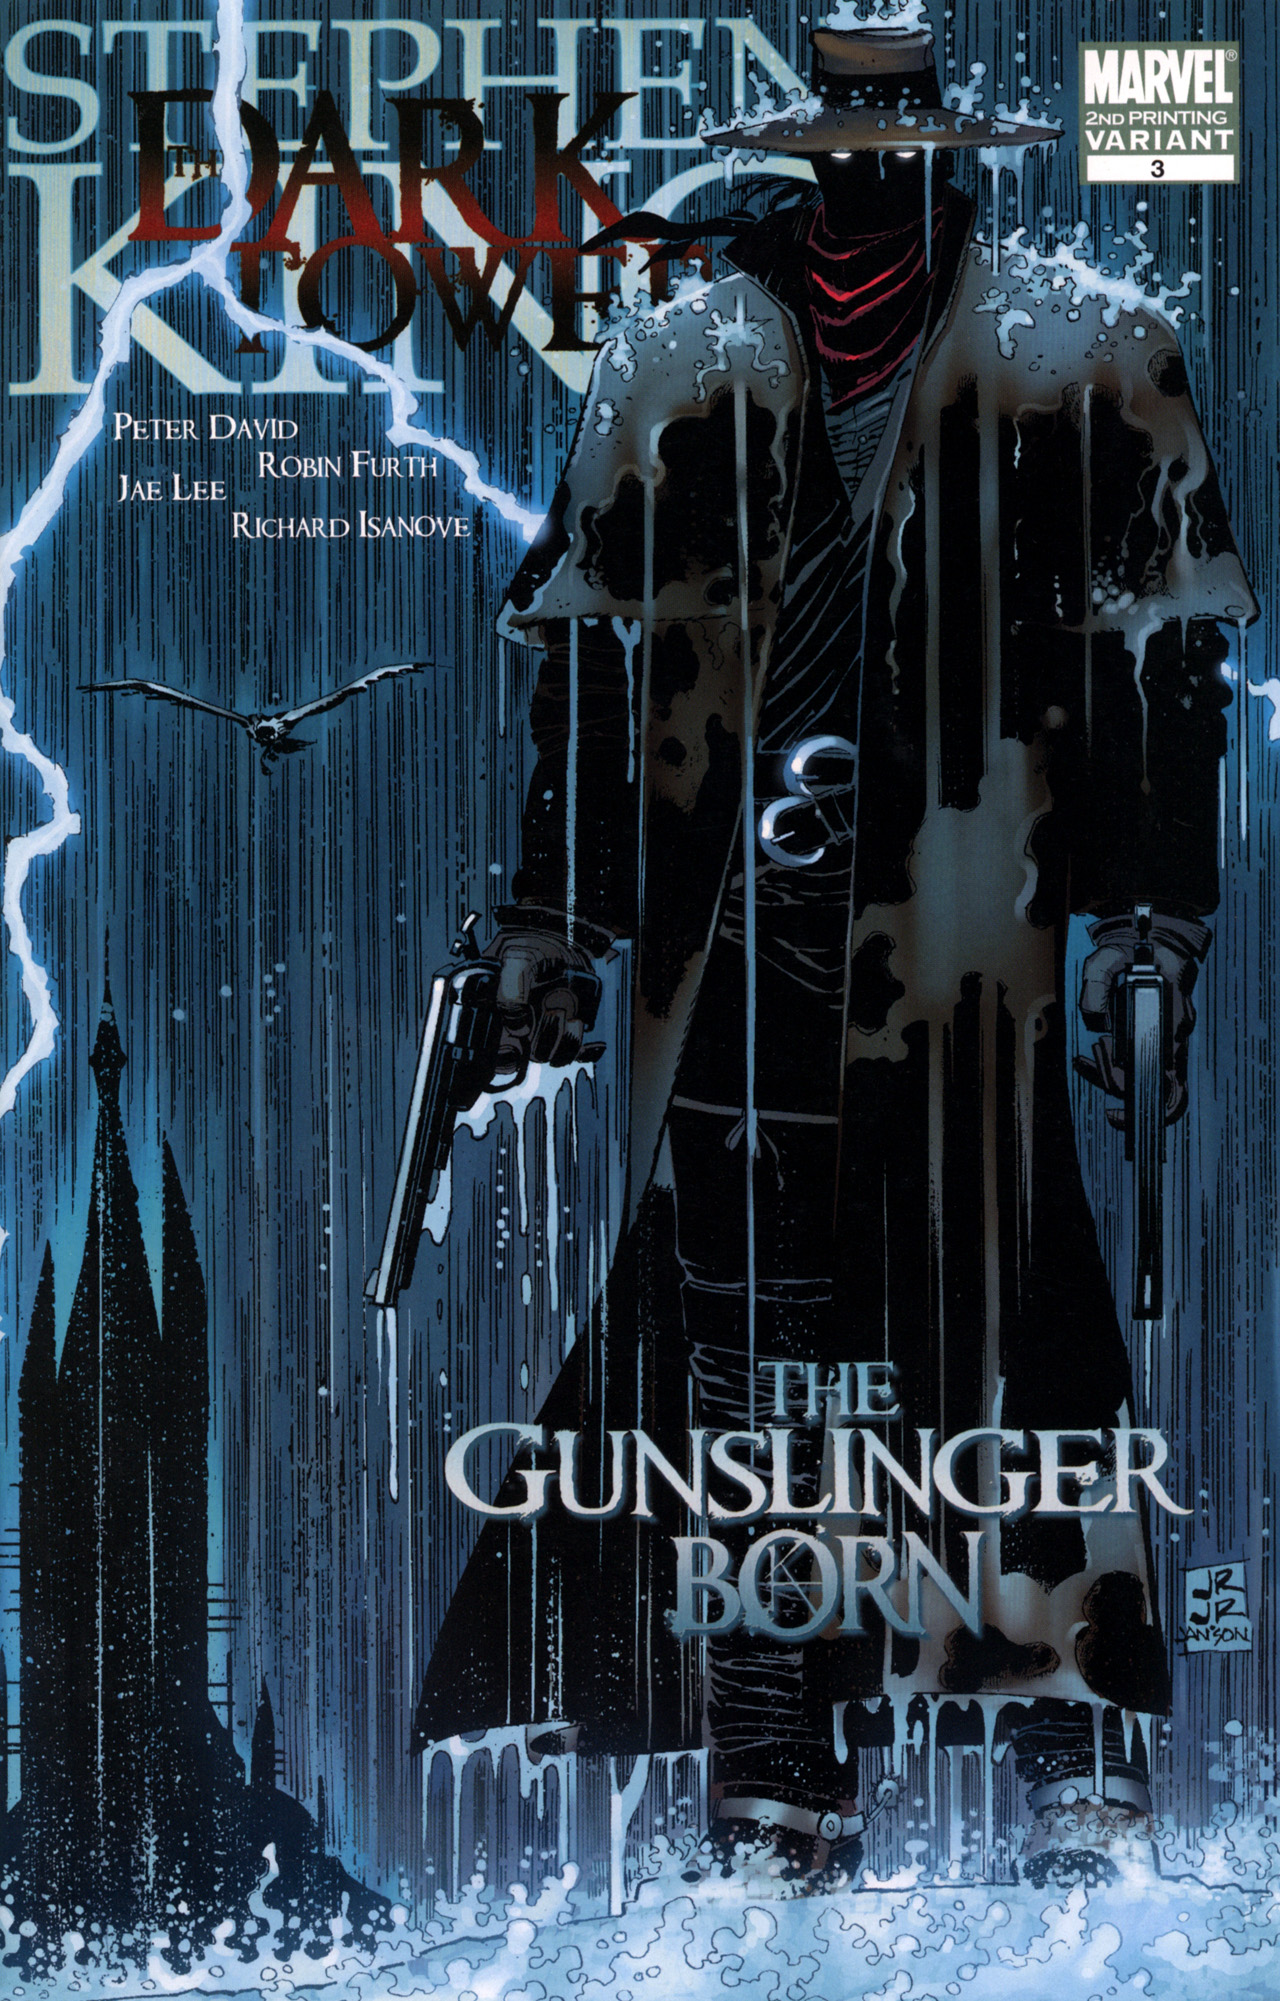 Dark Tower: The Gunslinger Born #3 - Part Three